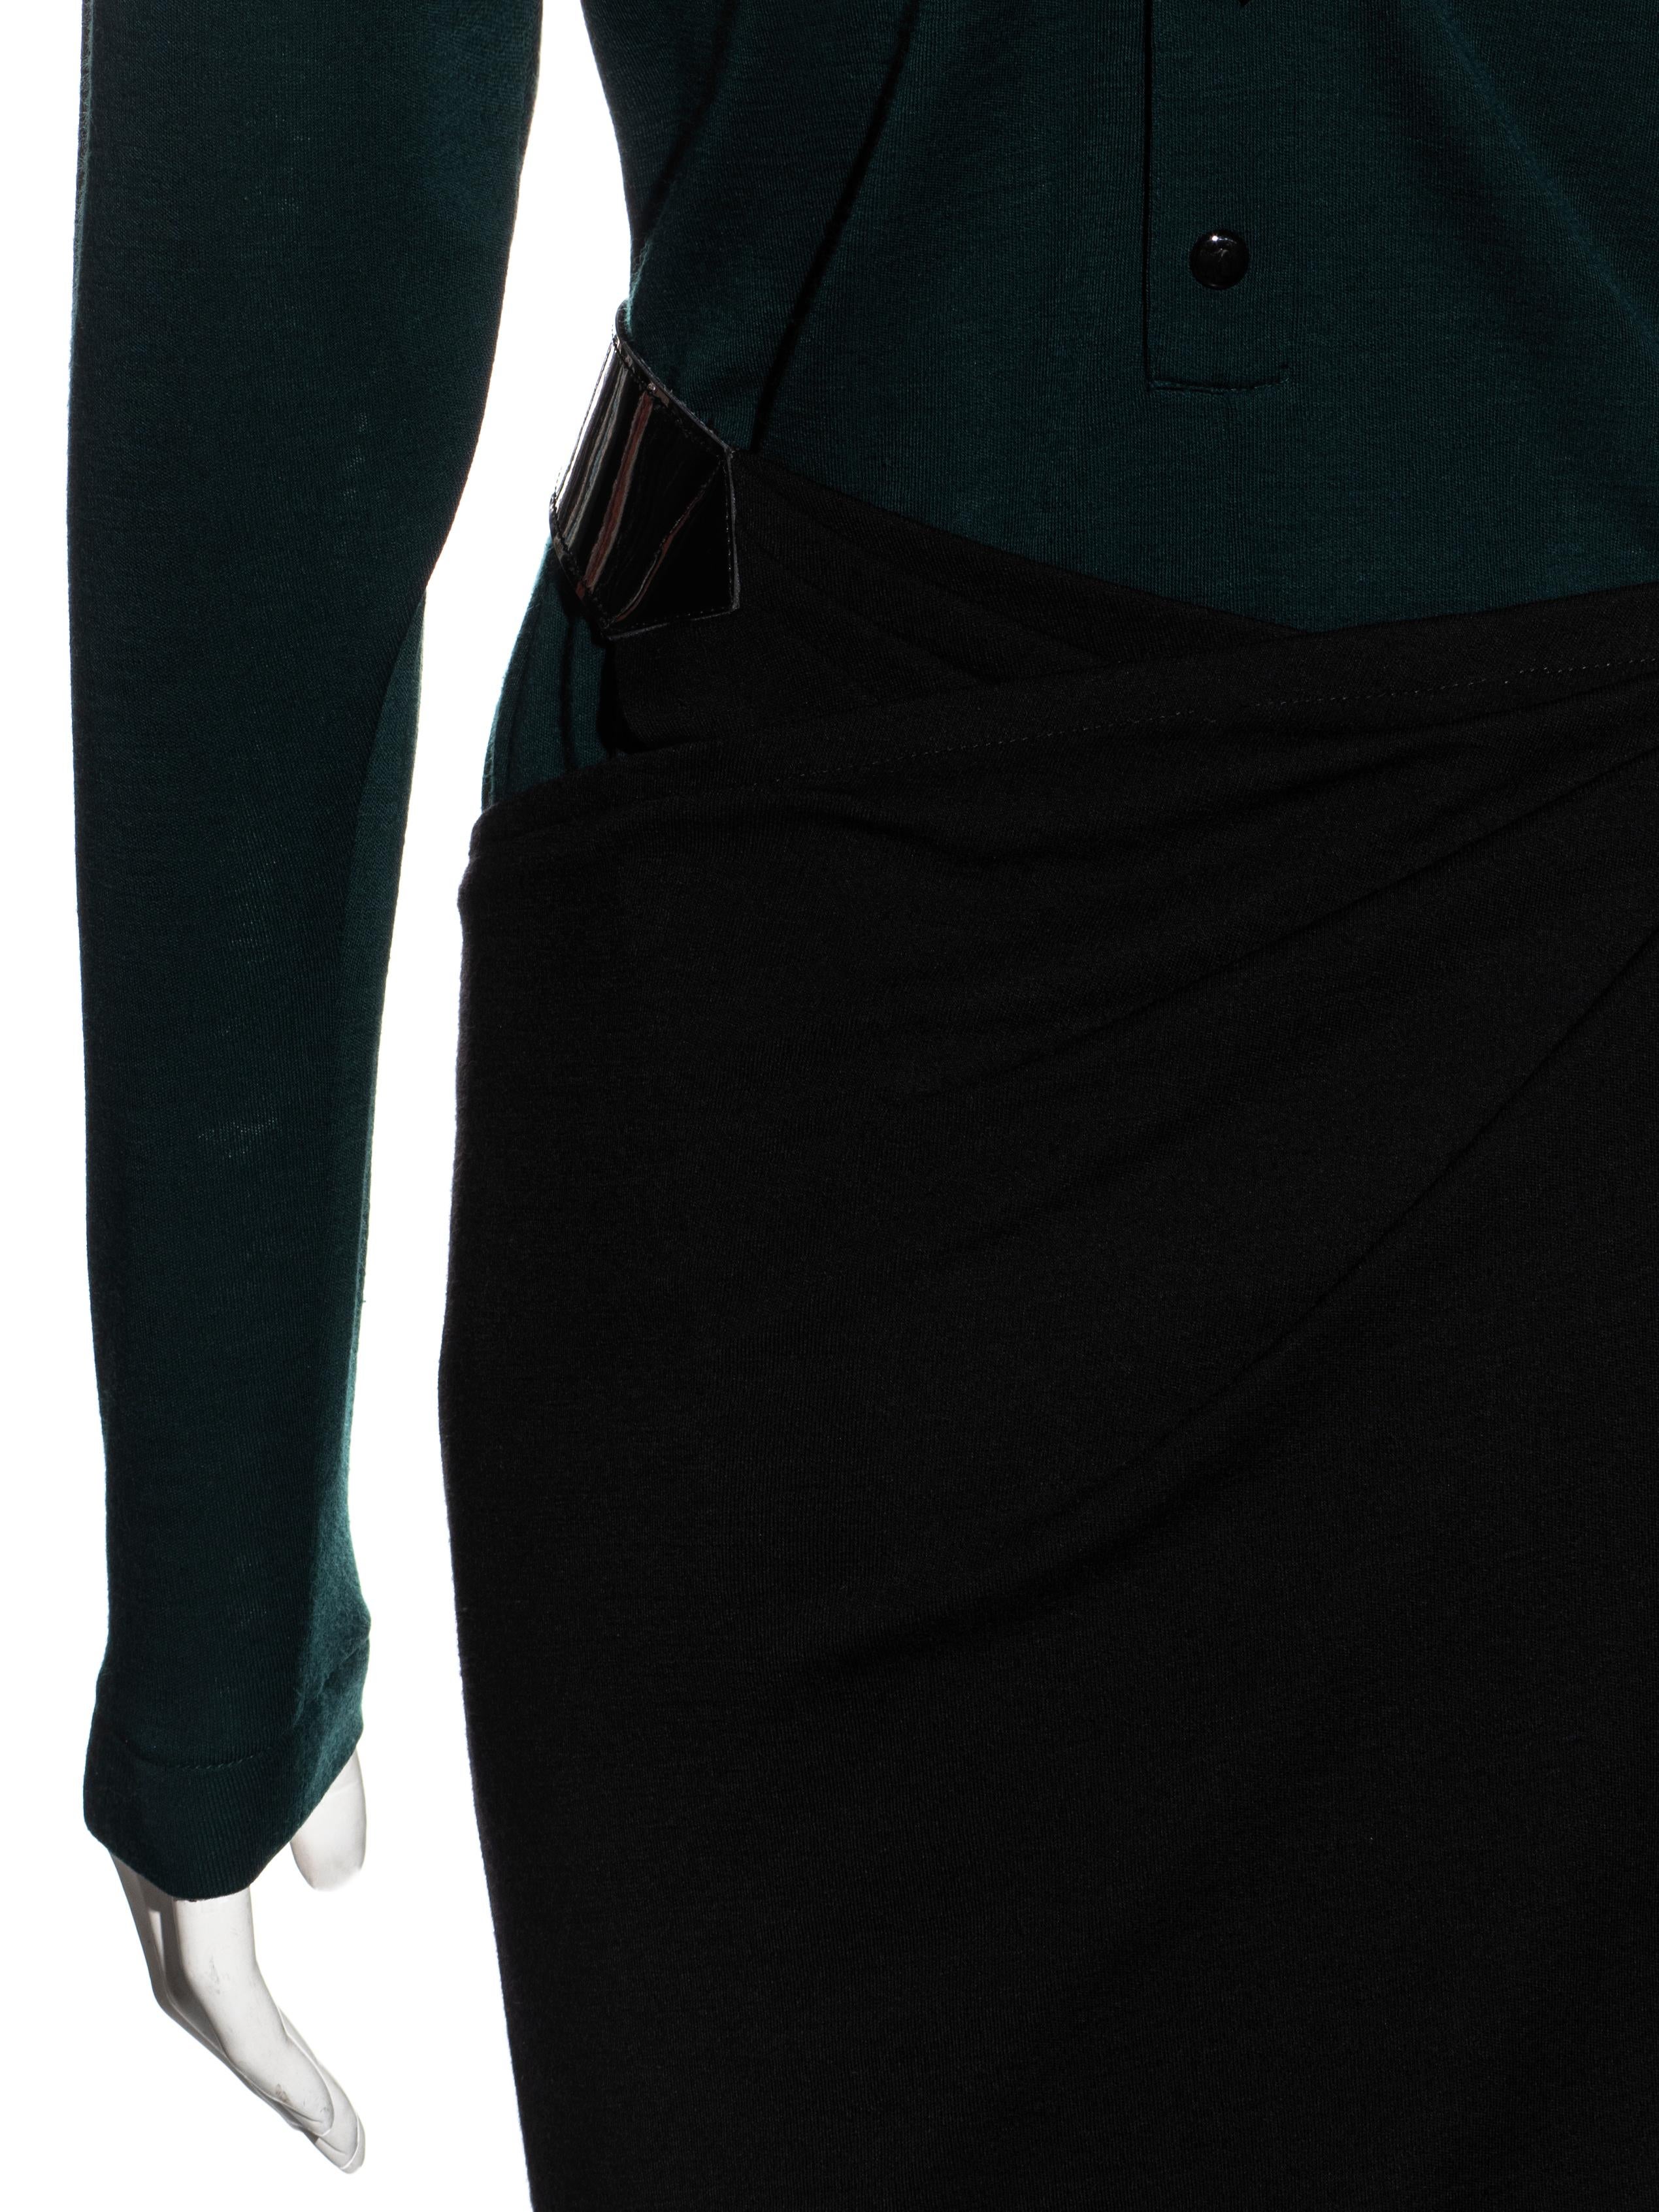 Azzedine Alaïa green and black wool jersey wrap dress, fw 1982 For Sale 1